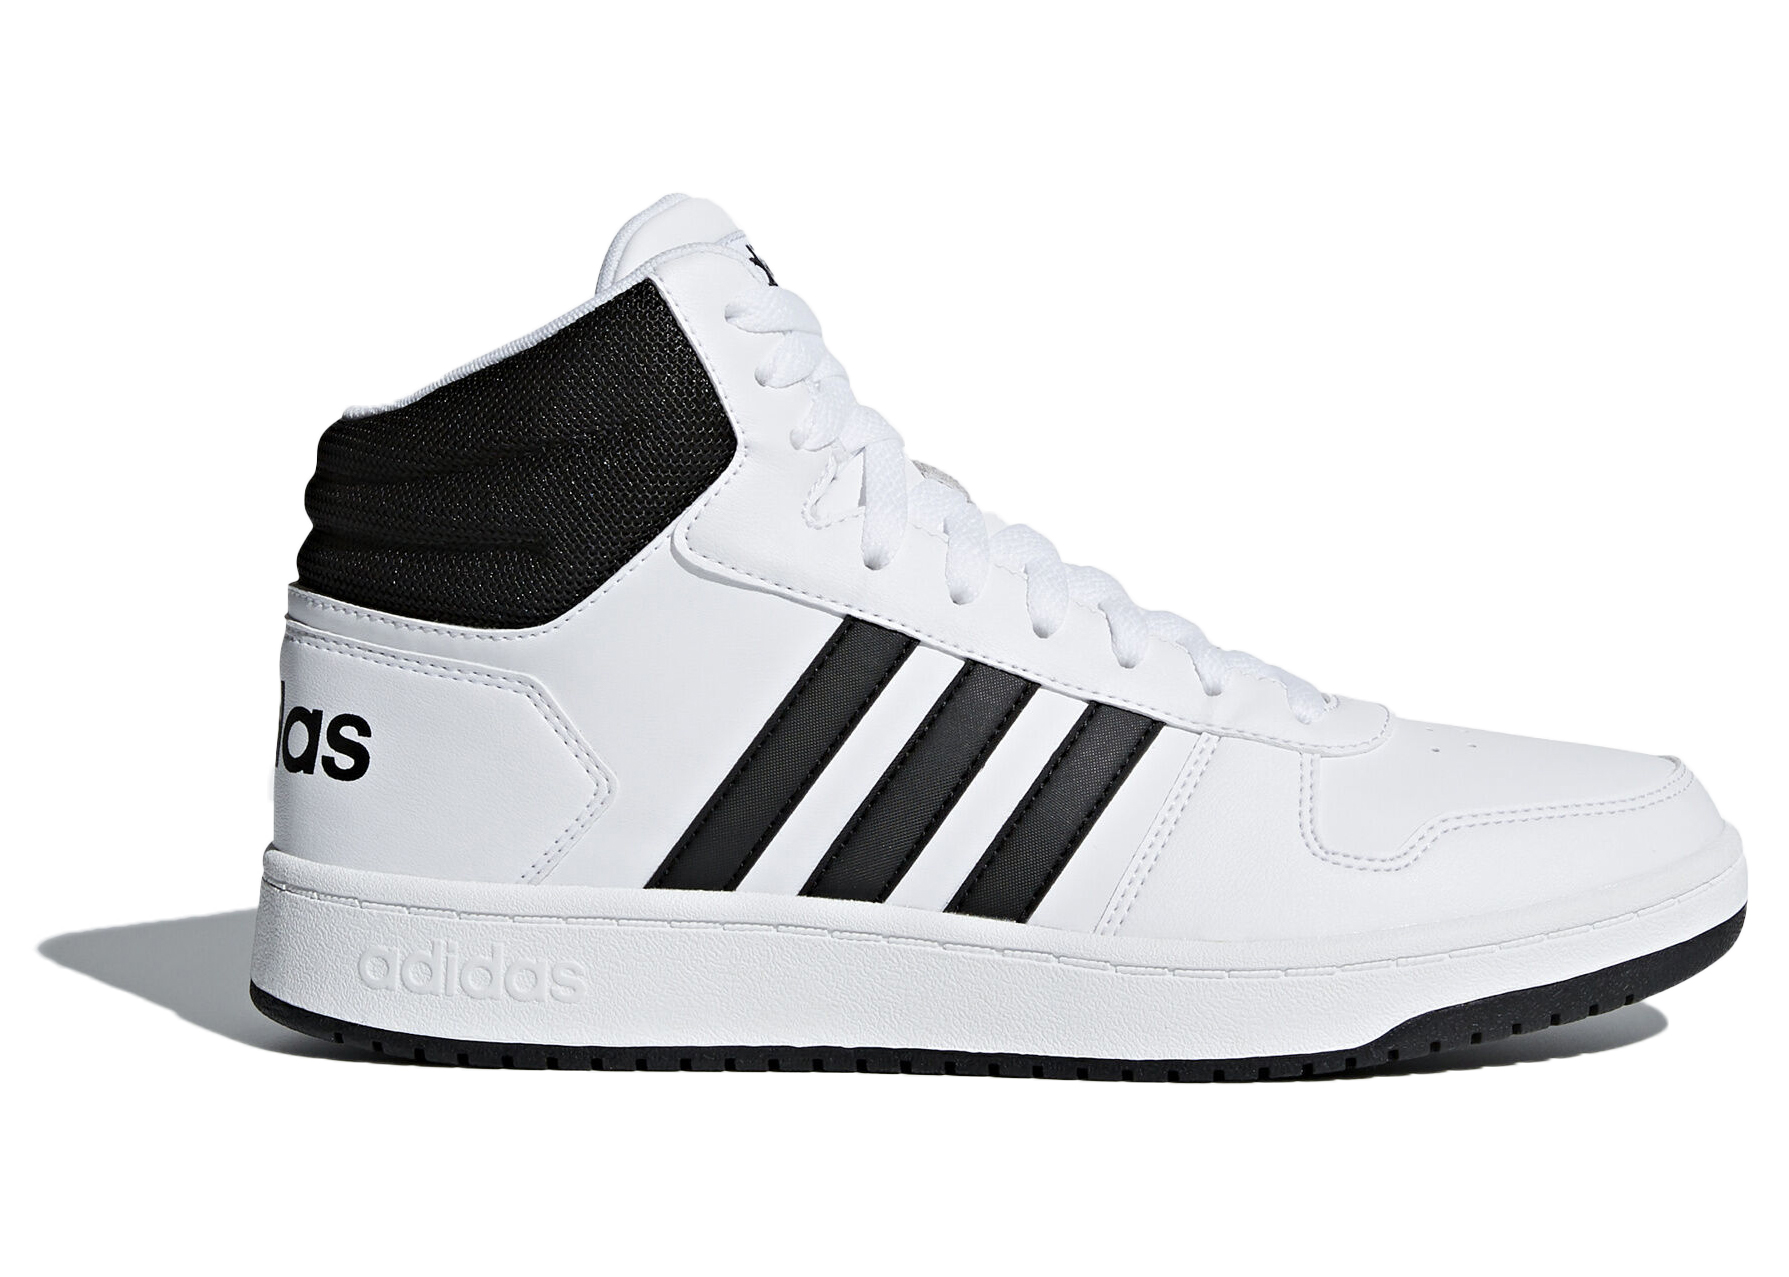 adidas Hoops 2.0 Mid White Black メンズ - BB7208 - JP